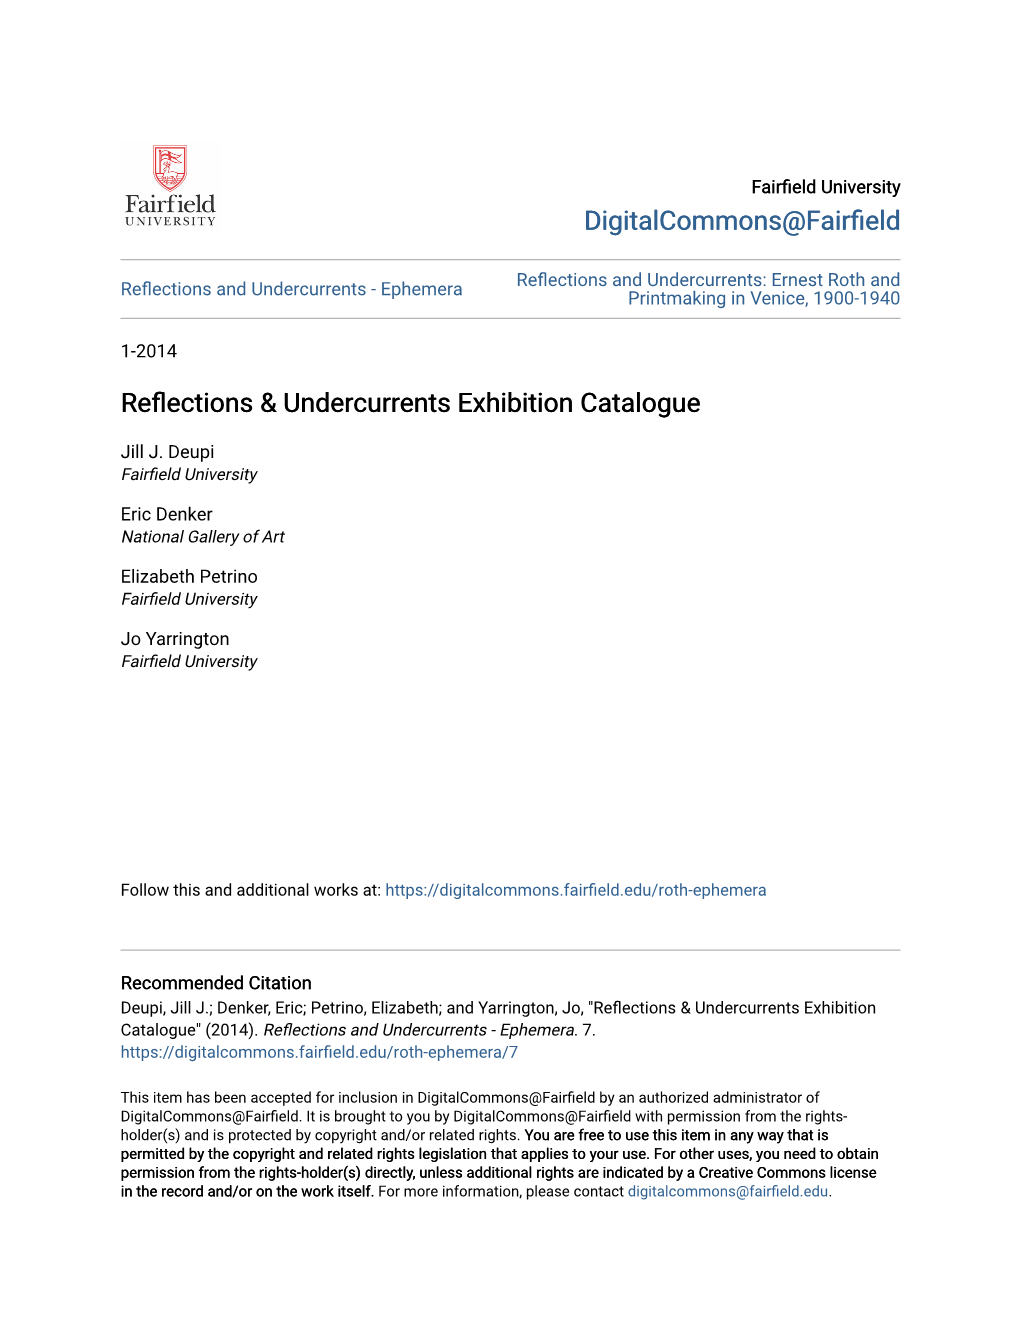 Reflections & Undercurrents Exhibition Catalogue